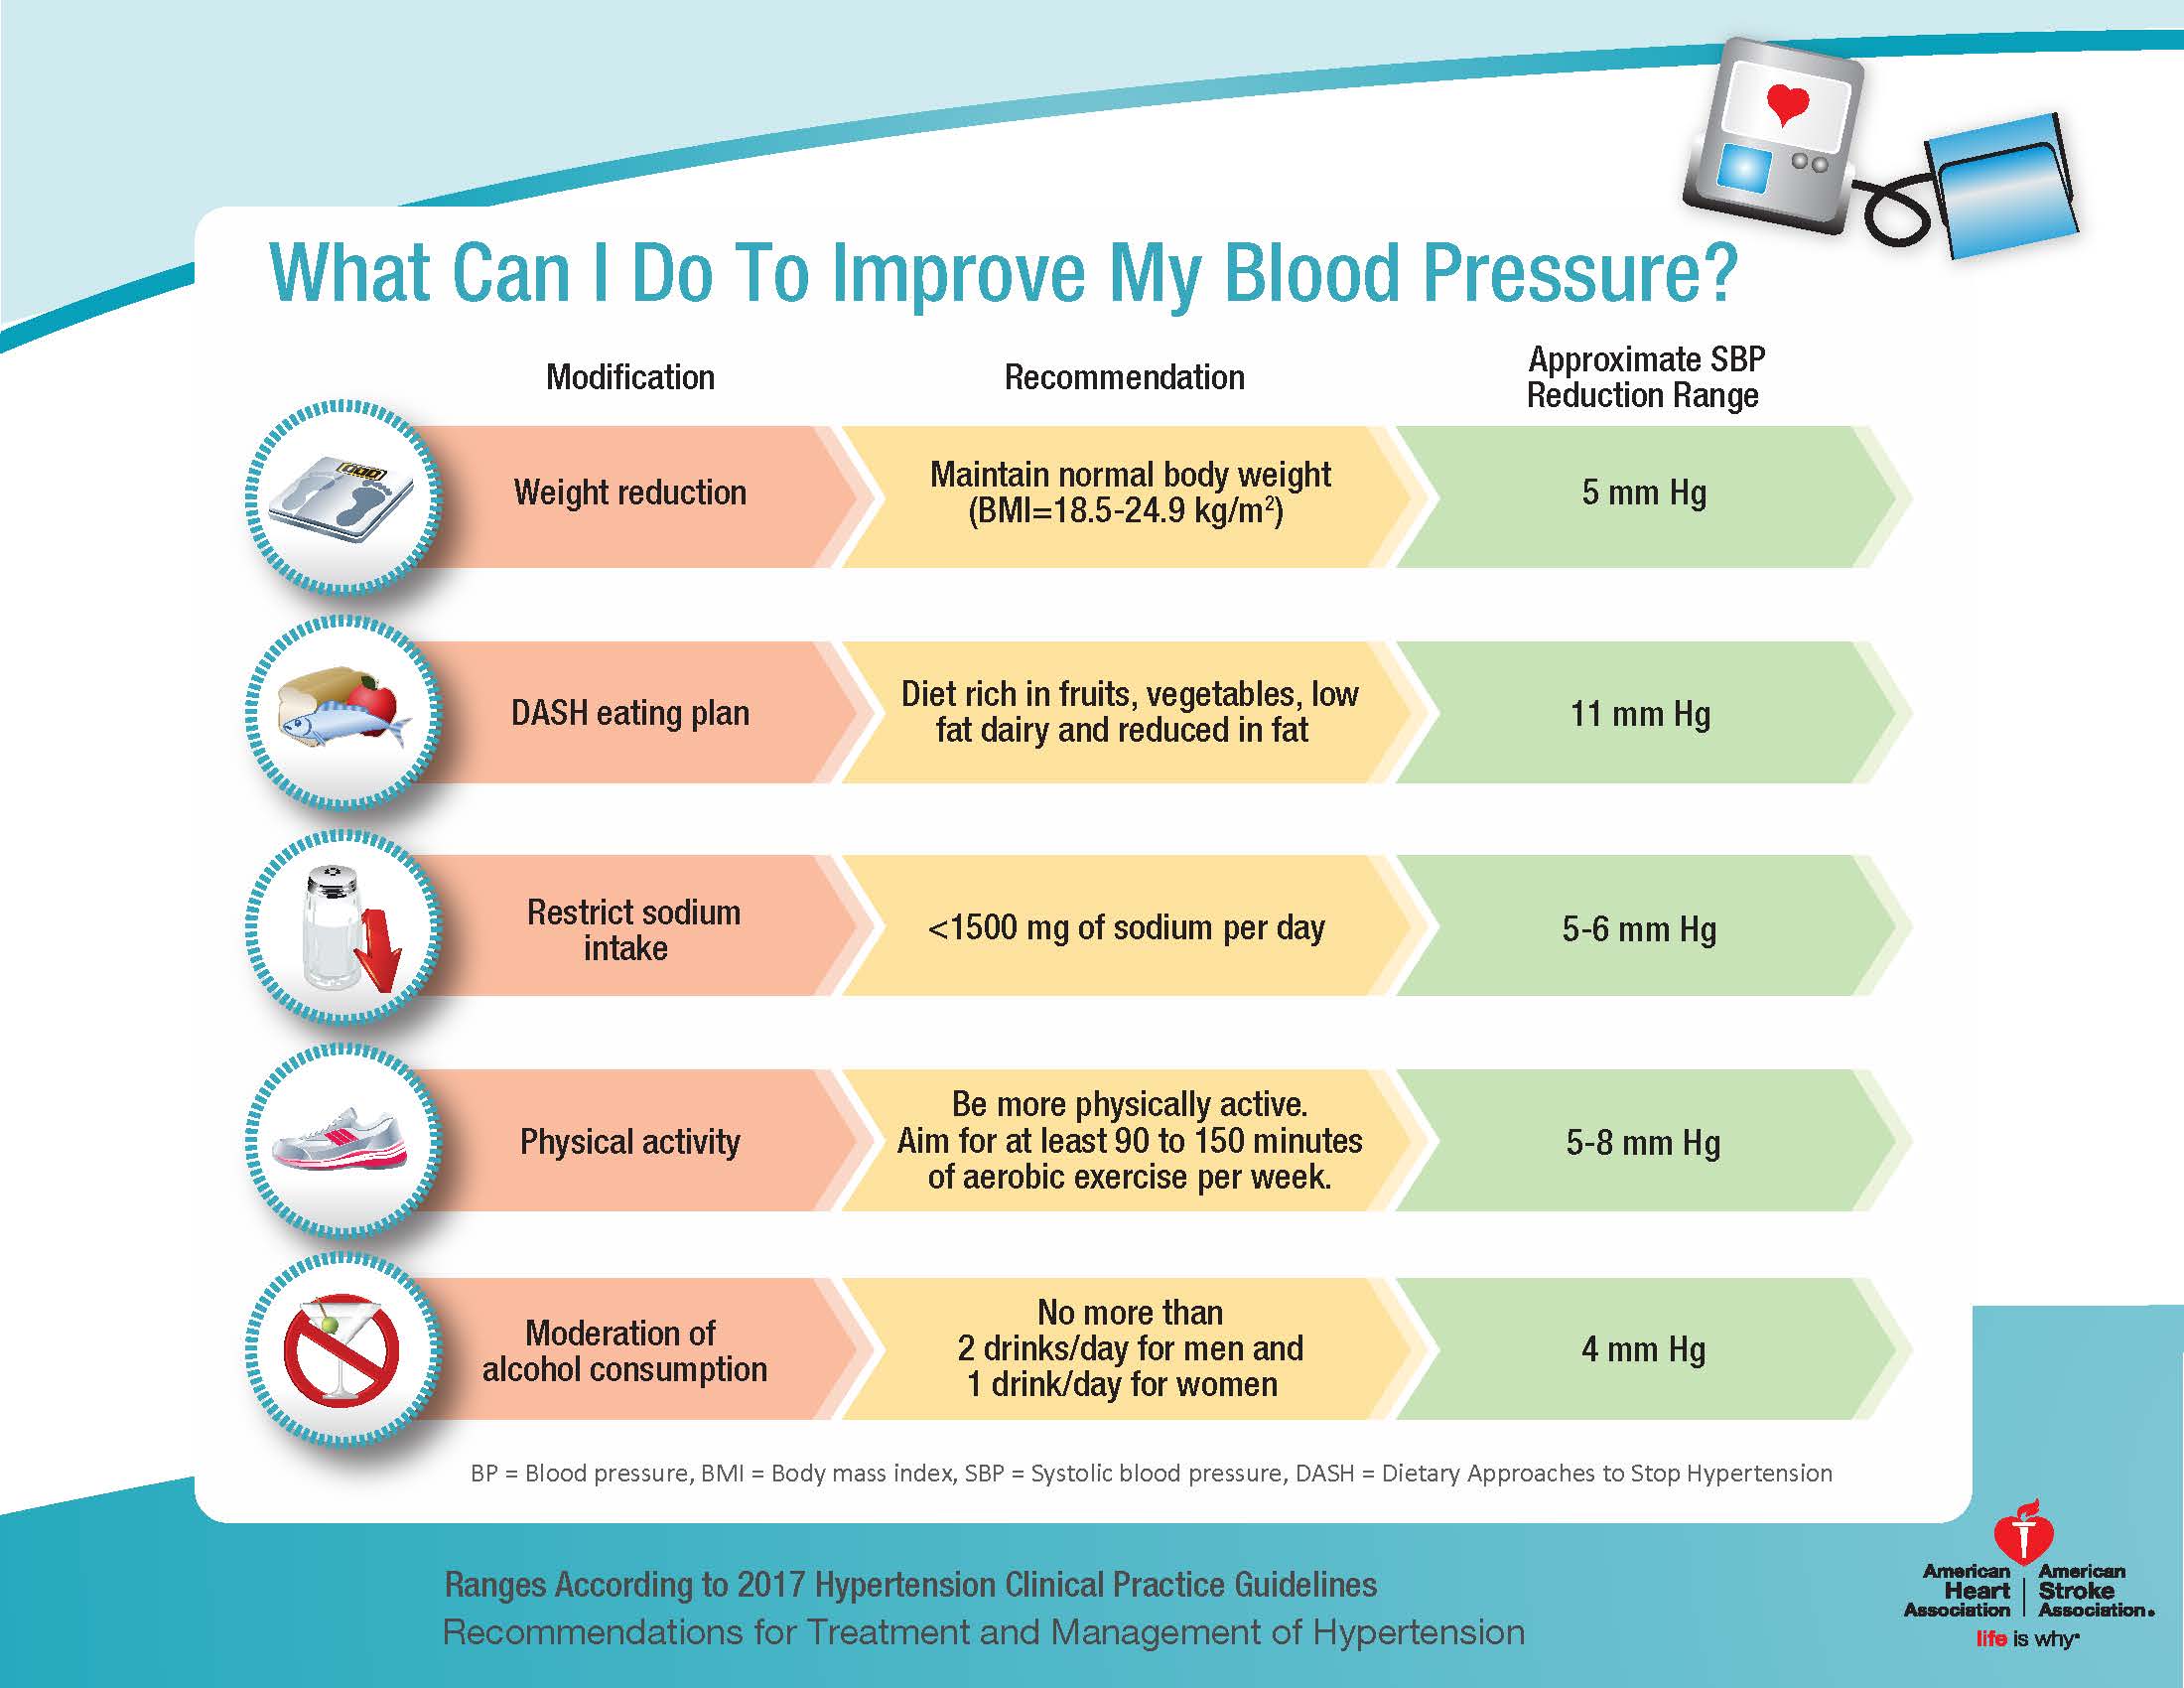 Steps to Improve Blood Pressure